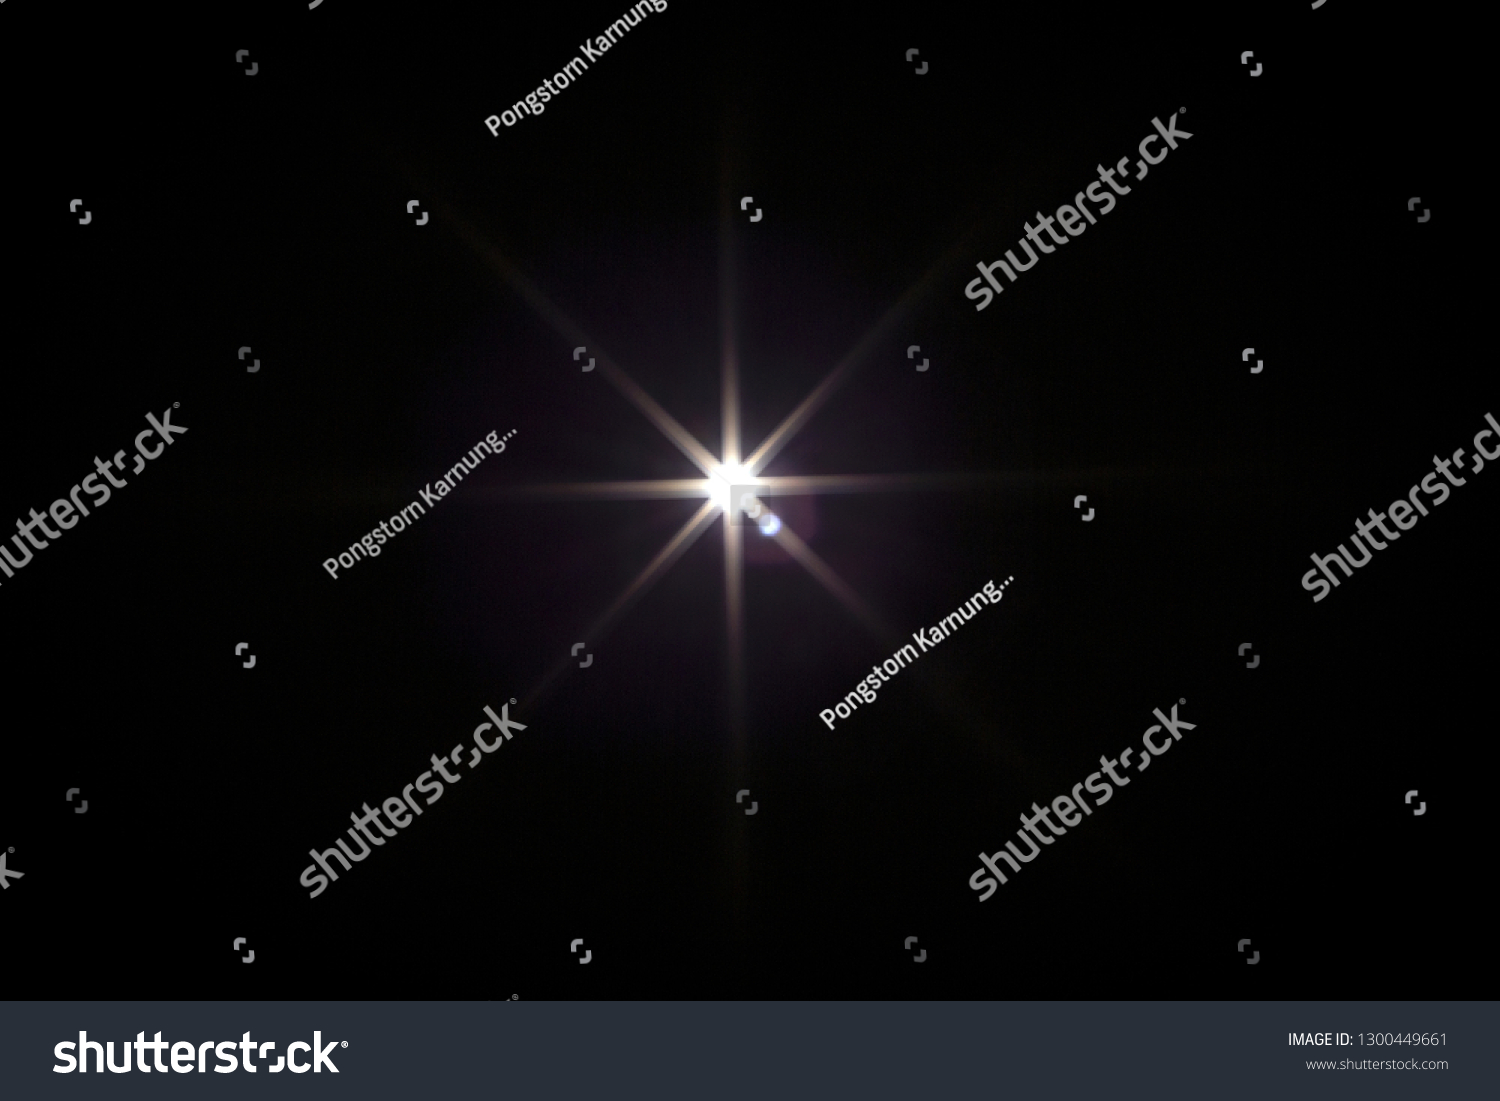 Flash light effect isolated on transparent background. White flashlight, flare or camera flash overlay #1300449661